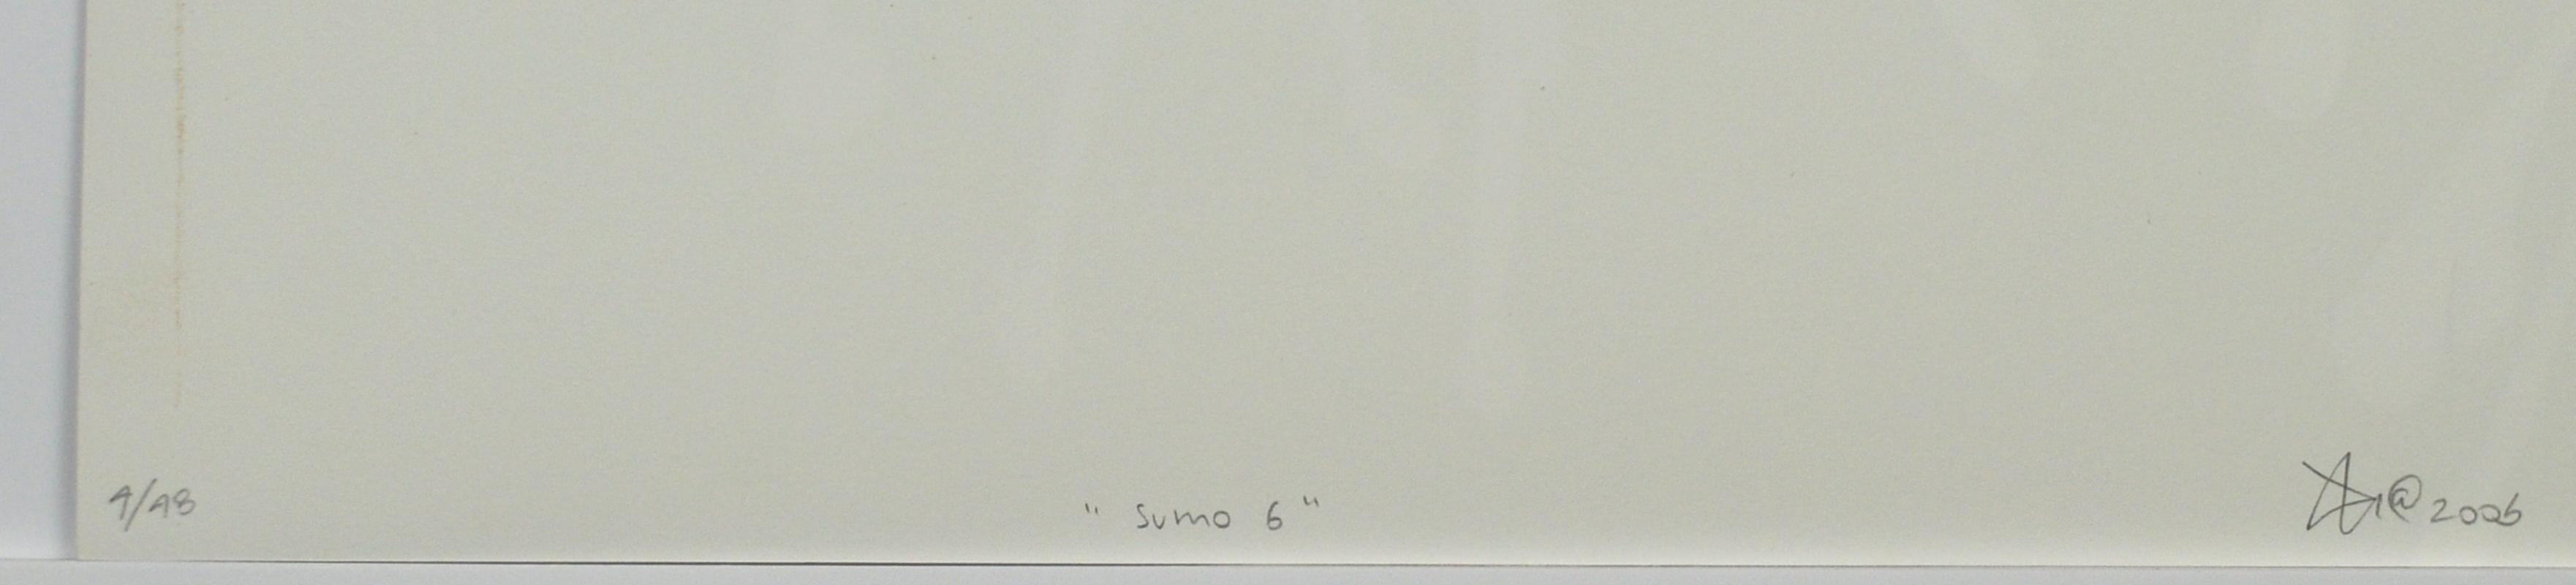 Scandinavian Screen Print, “Taiho Koki, Sumo 6” , Woodcut, numbered and signed For Sale 3